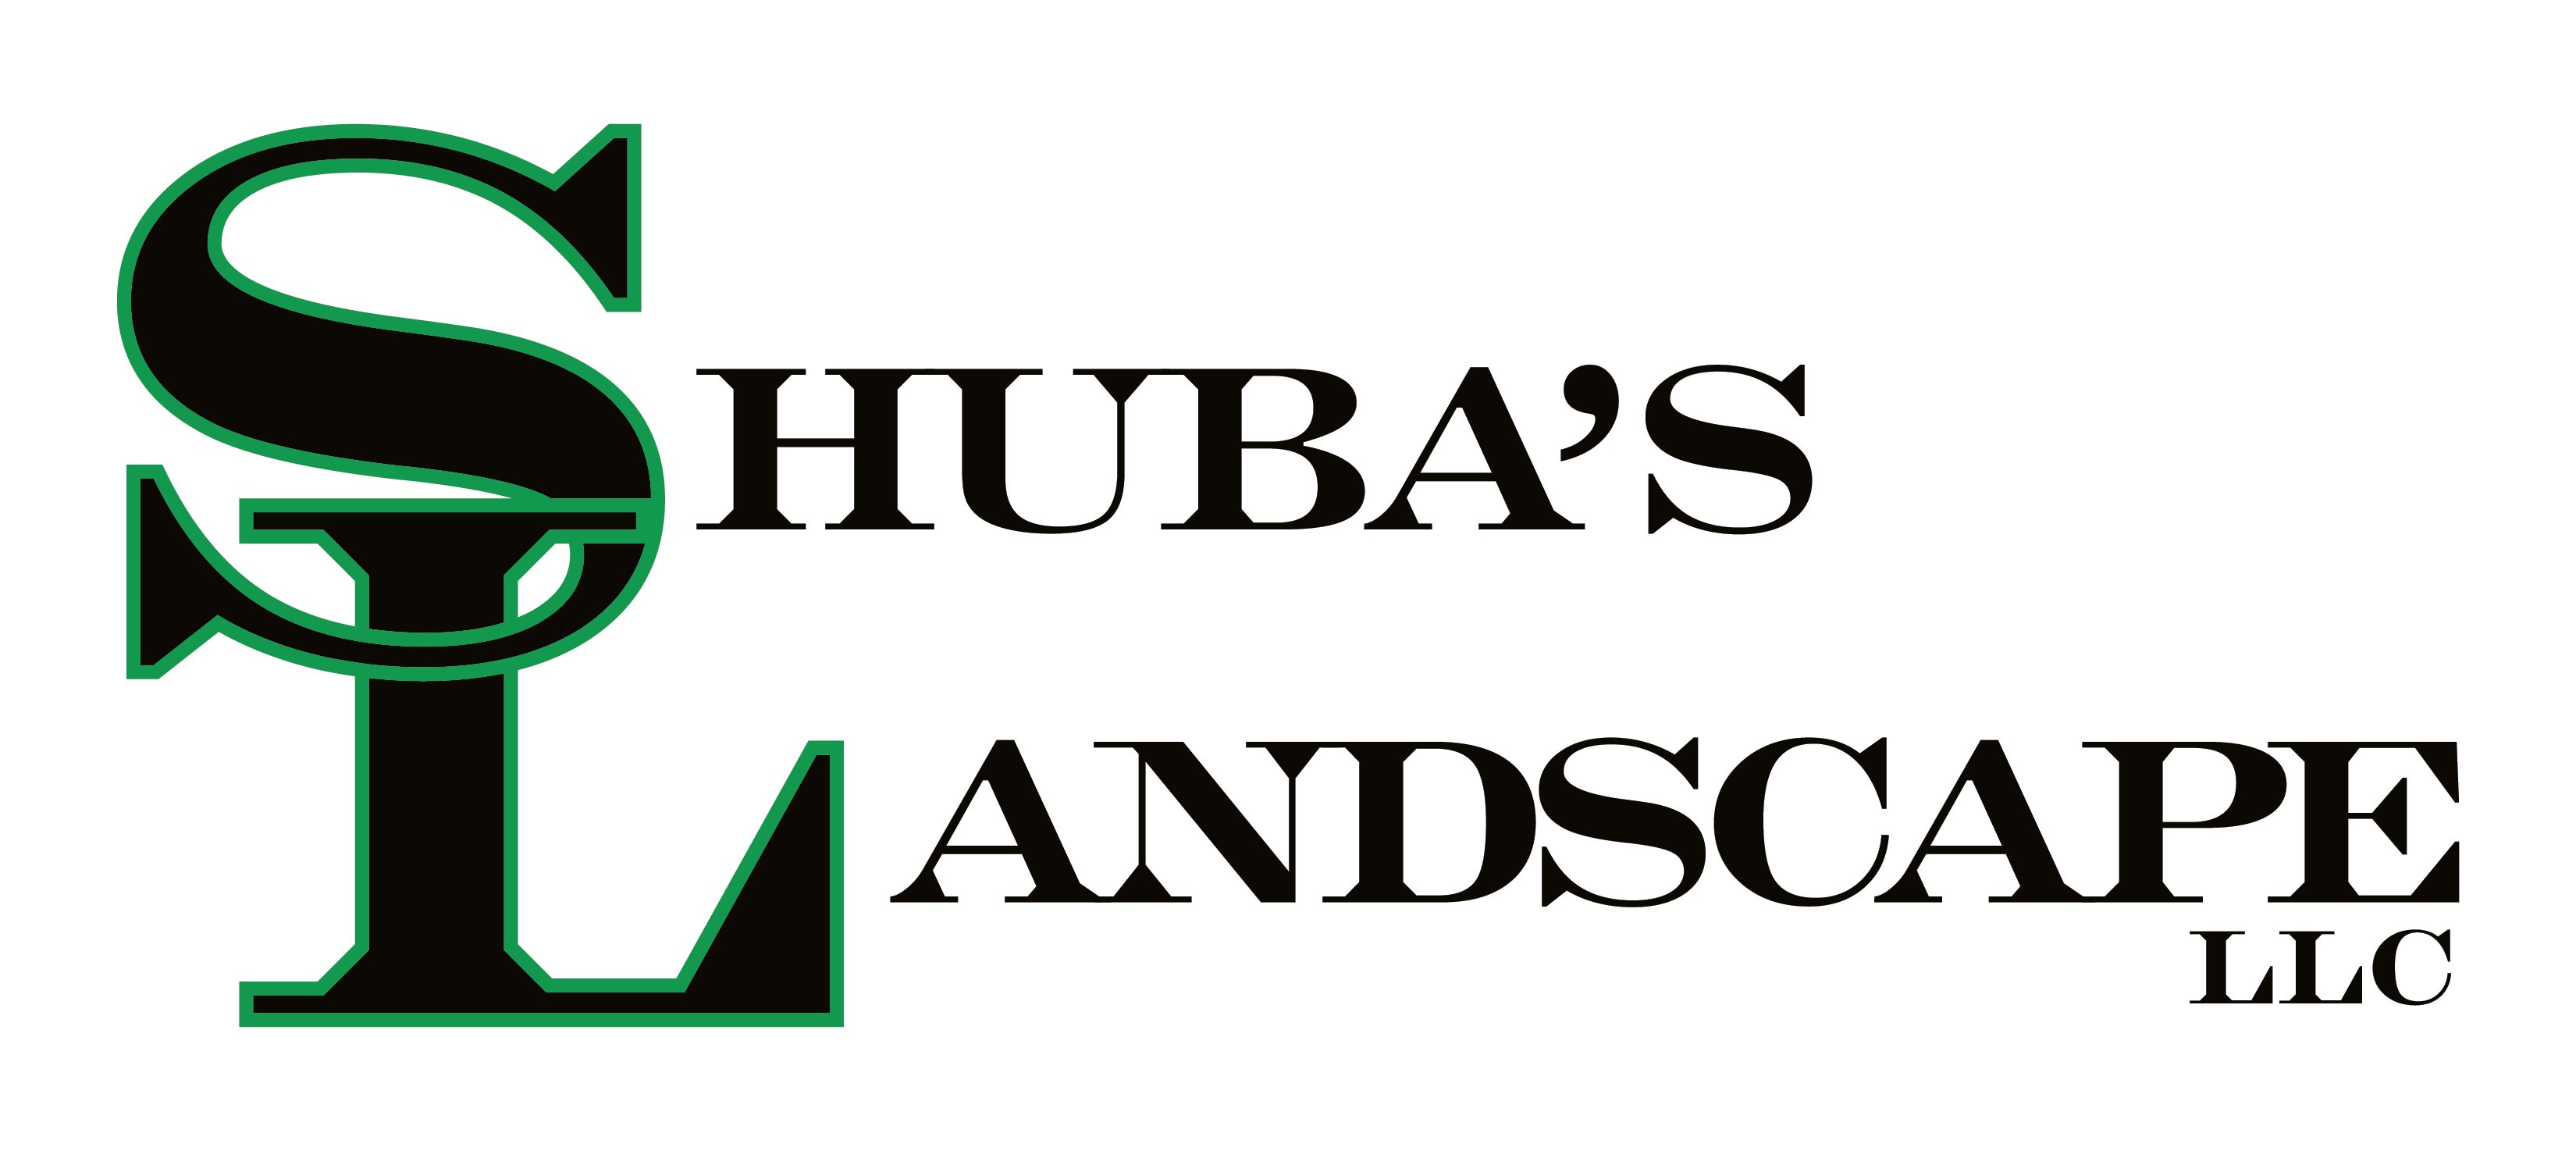 Shuba's Landscape, LLC Logo